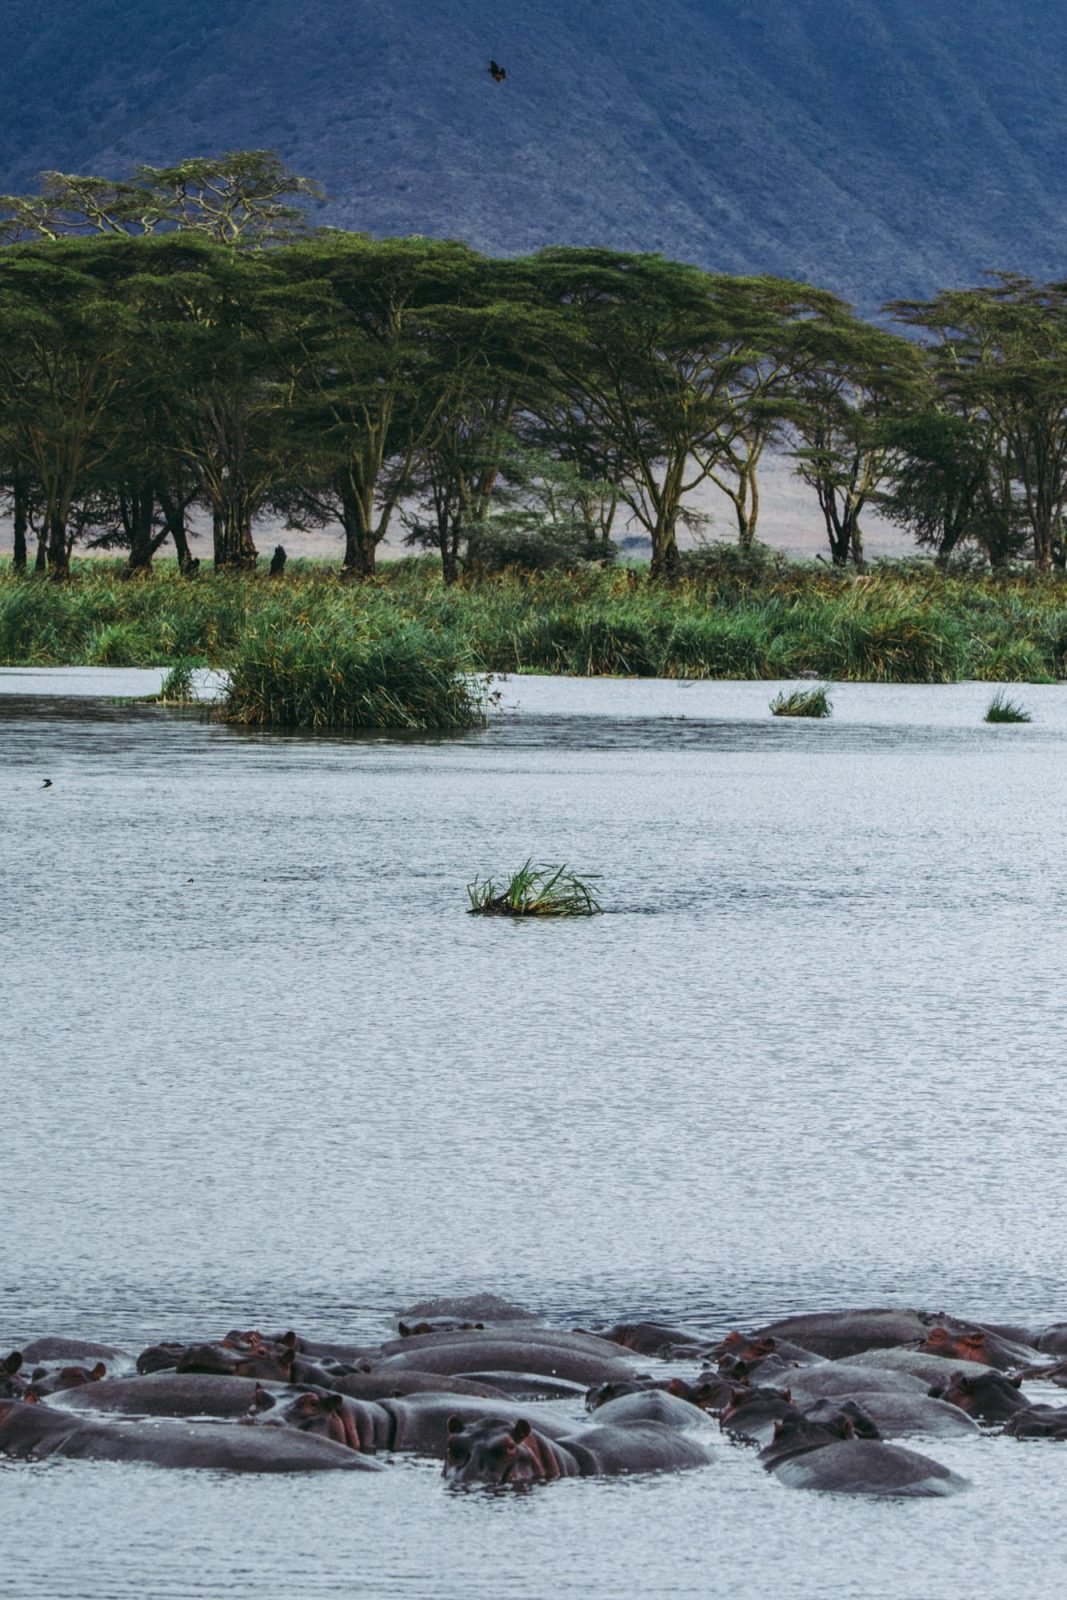 What You Need to Know About a Ngorongoro Safari in Tanzania